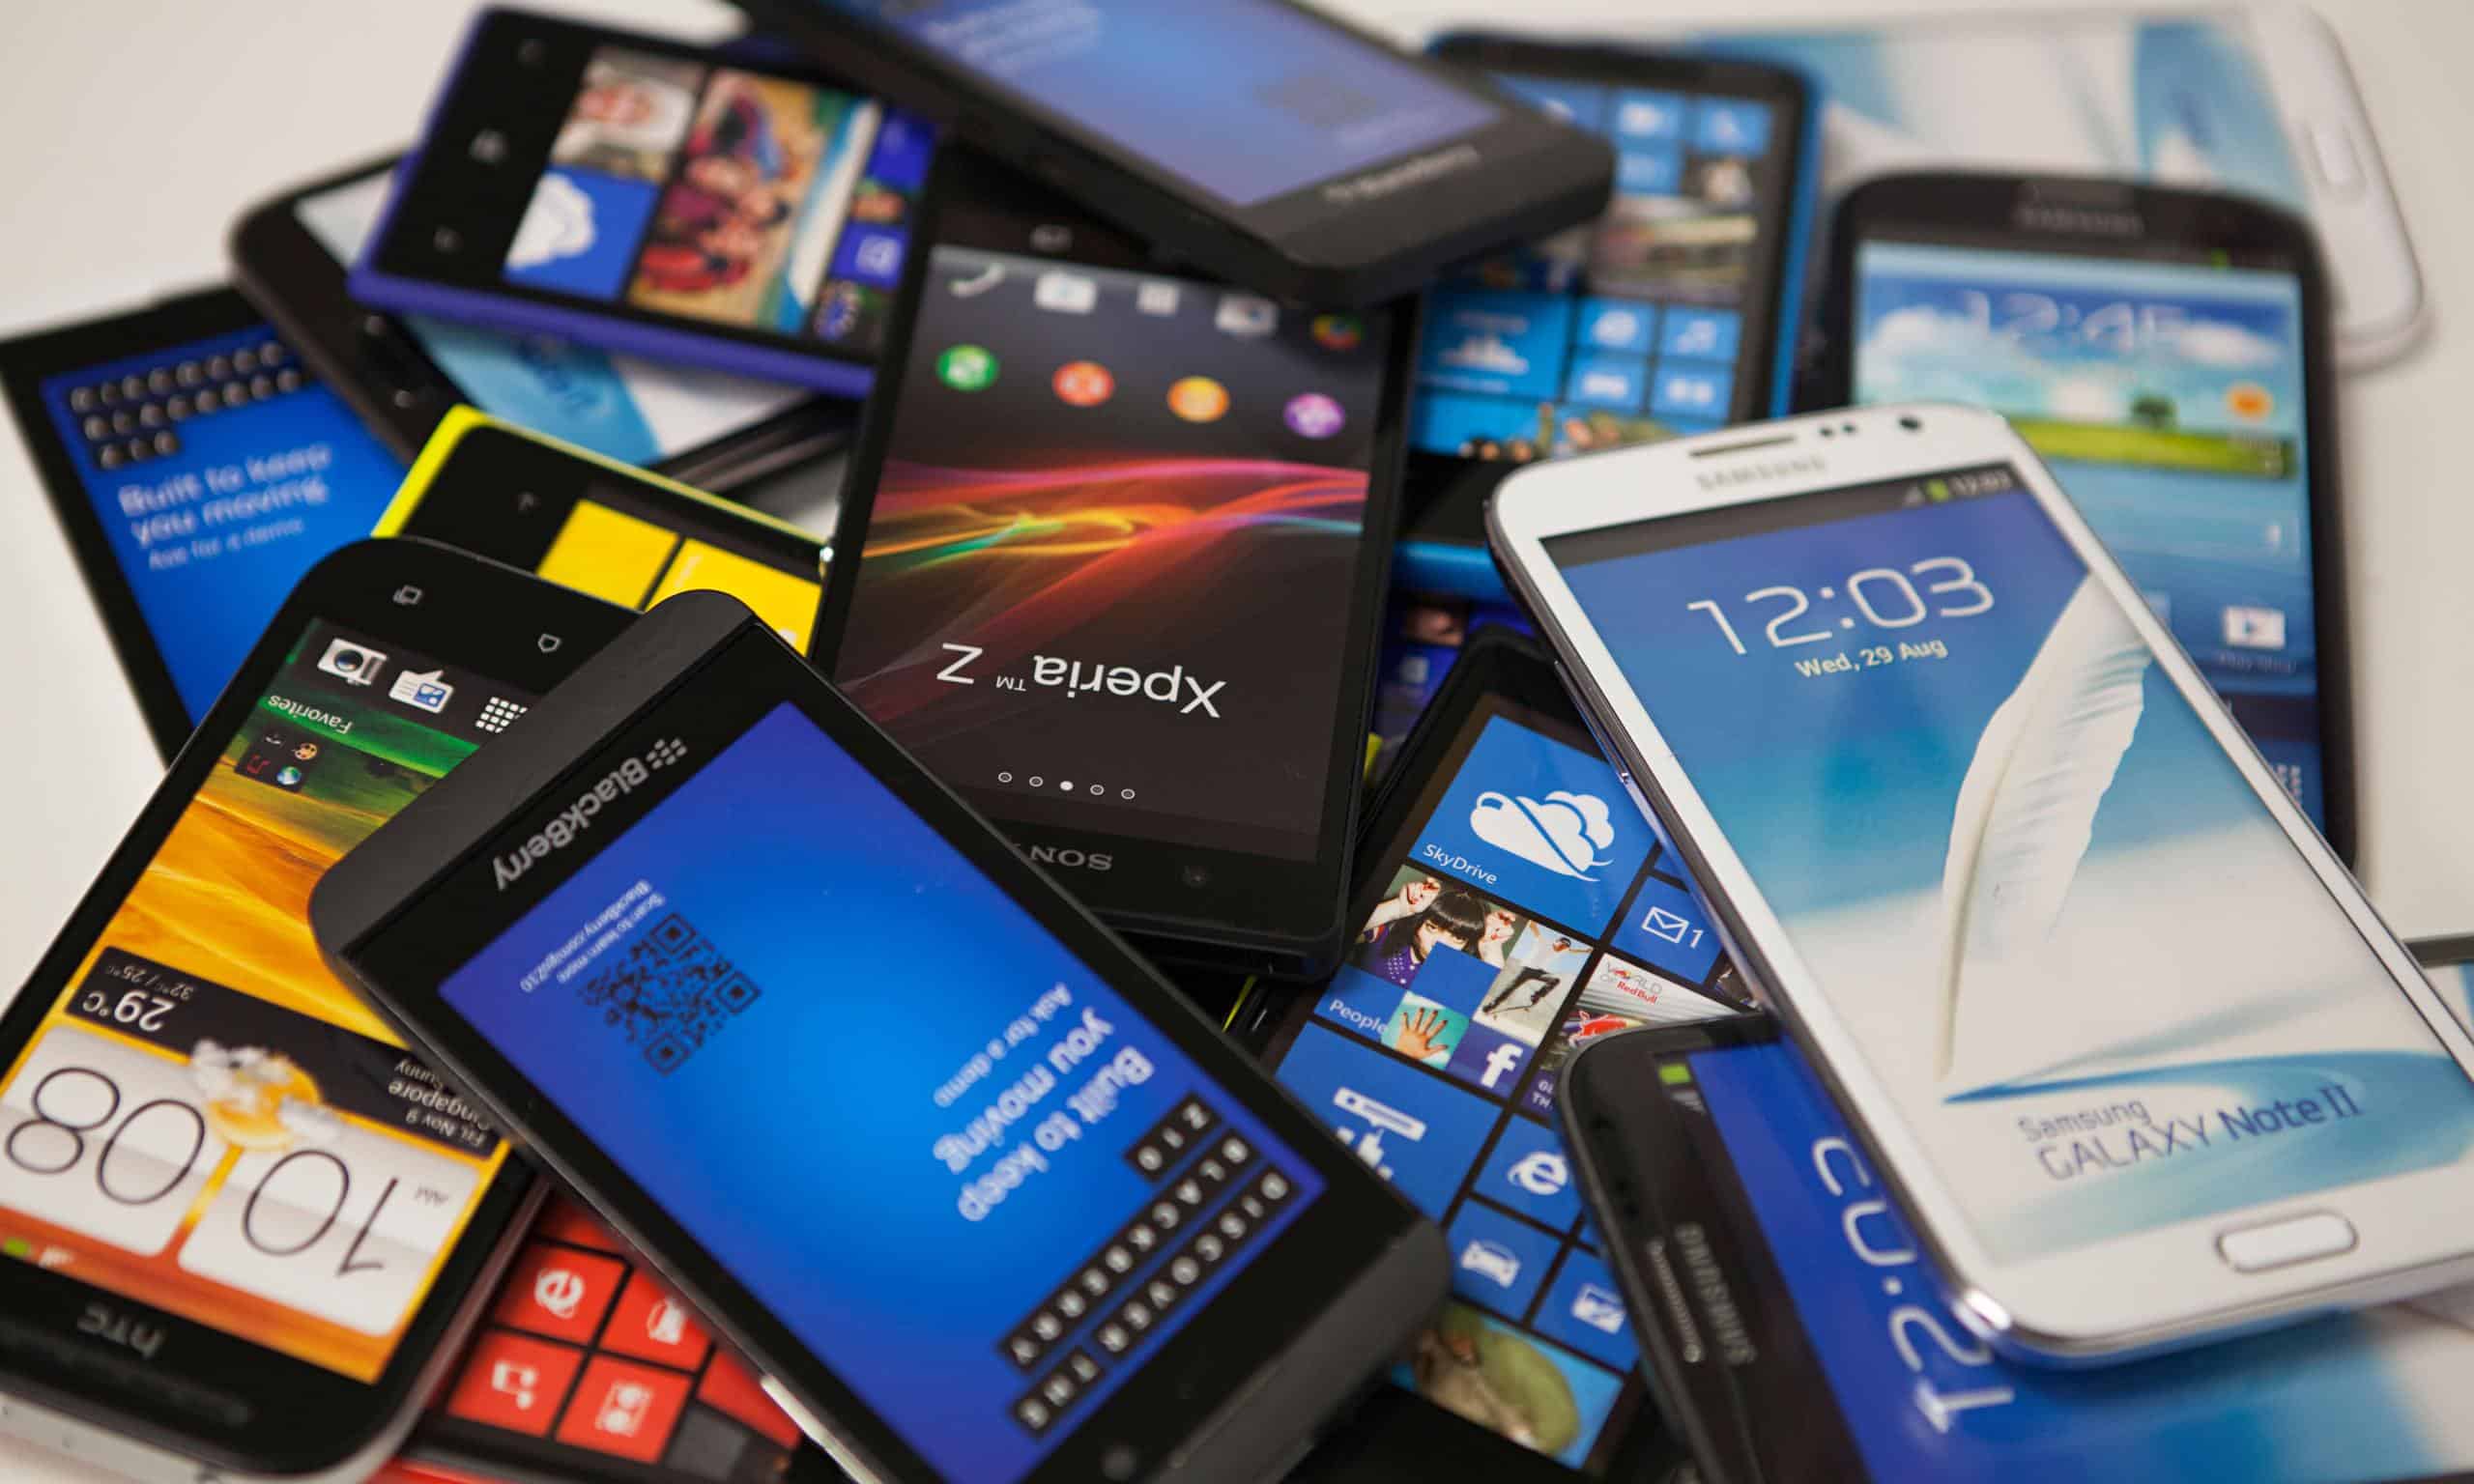 Mobile phone manufacturers seek timelines of PLI scheme